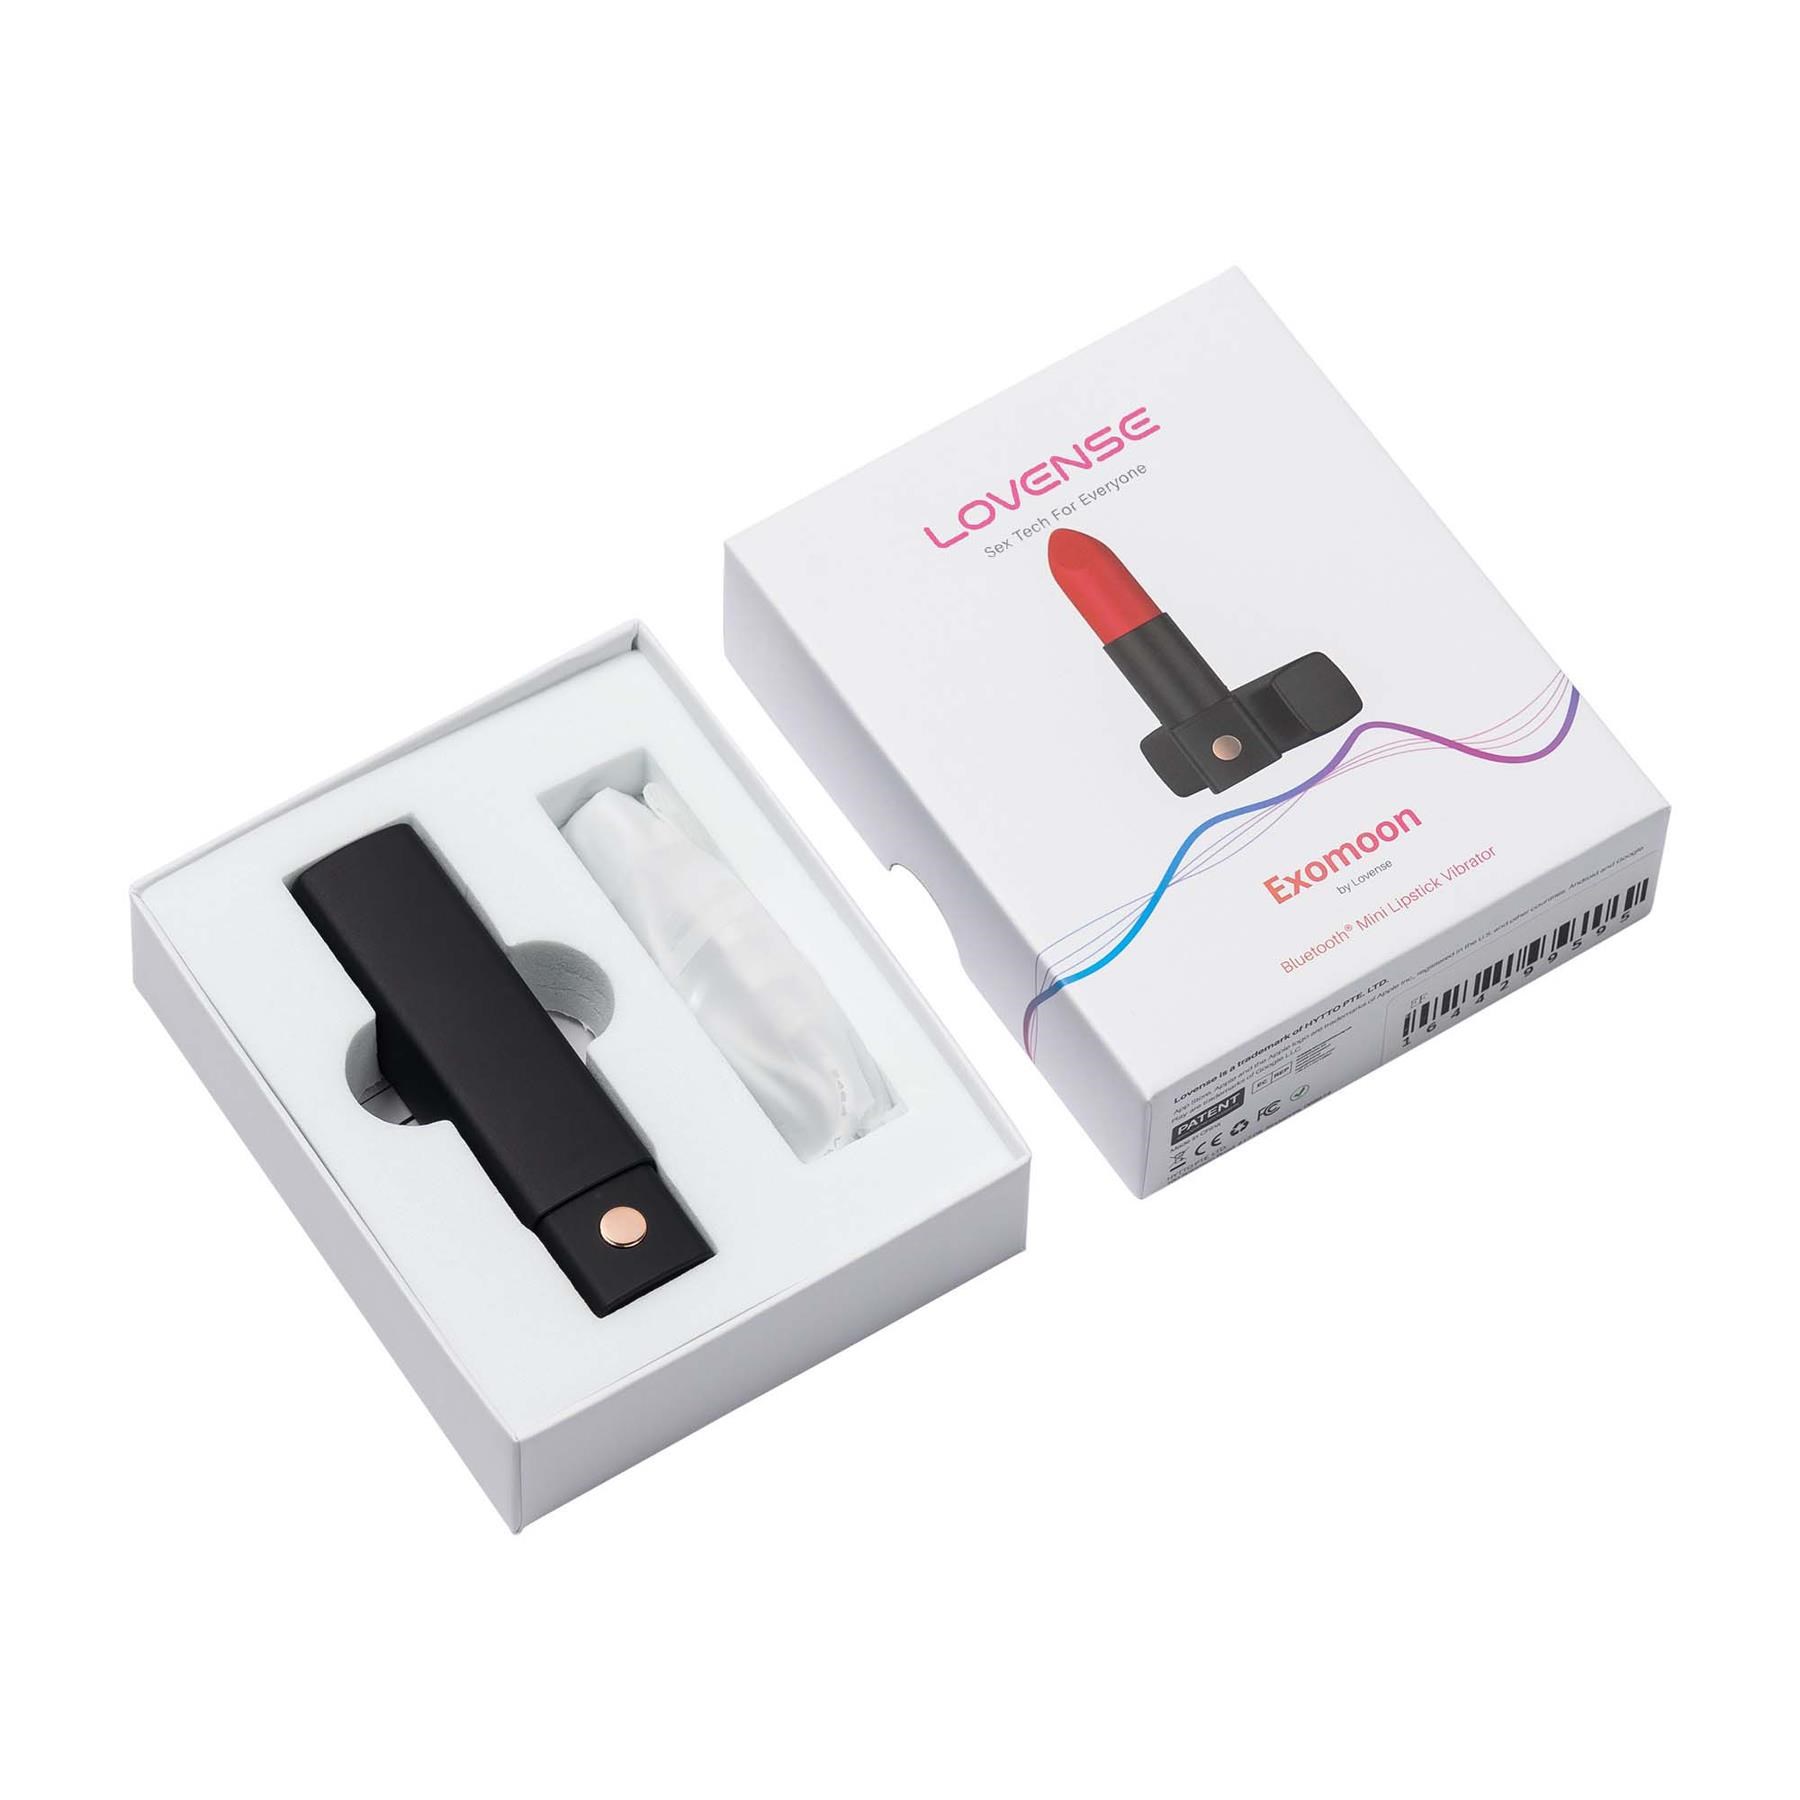 Lovense Bluetooth Exomoon Lipstick Vibrator - Open Box Showing Product